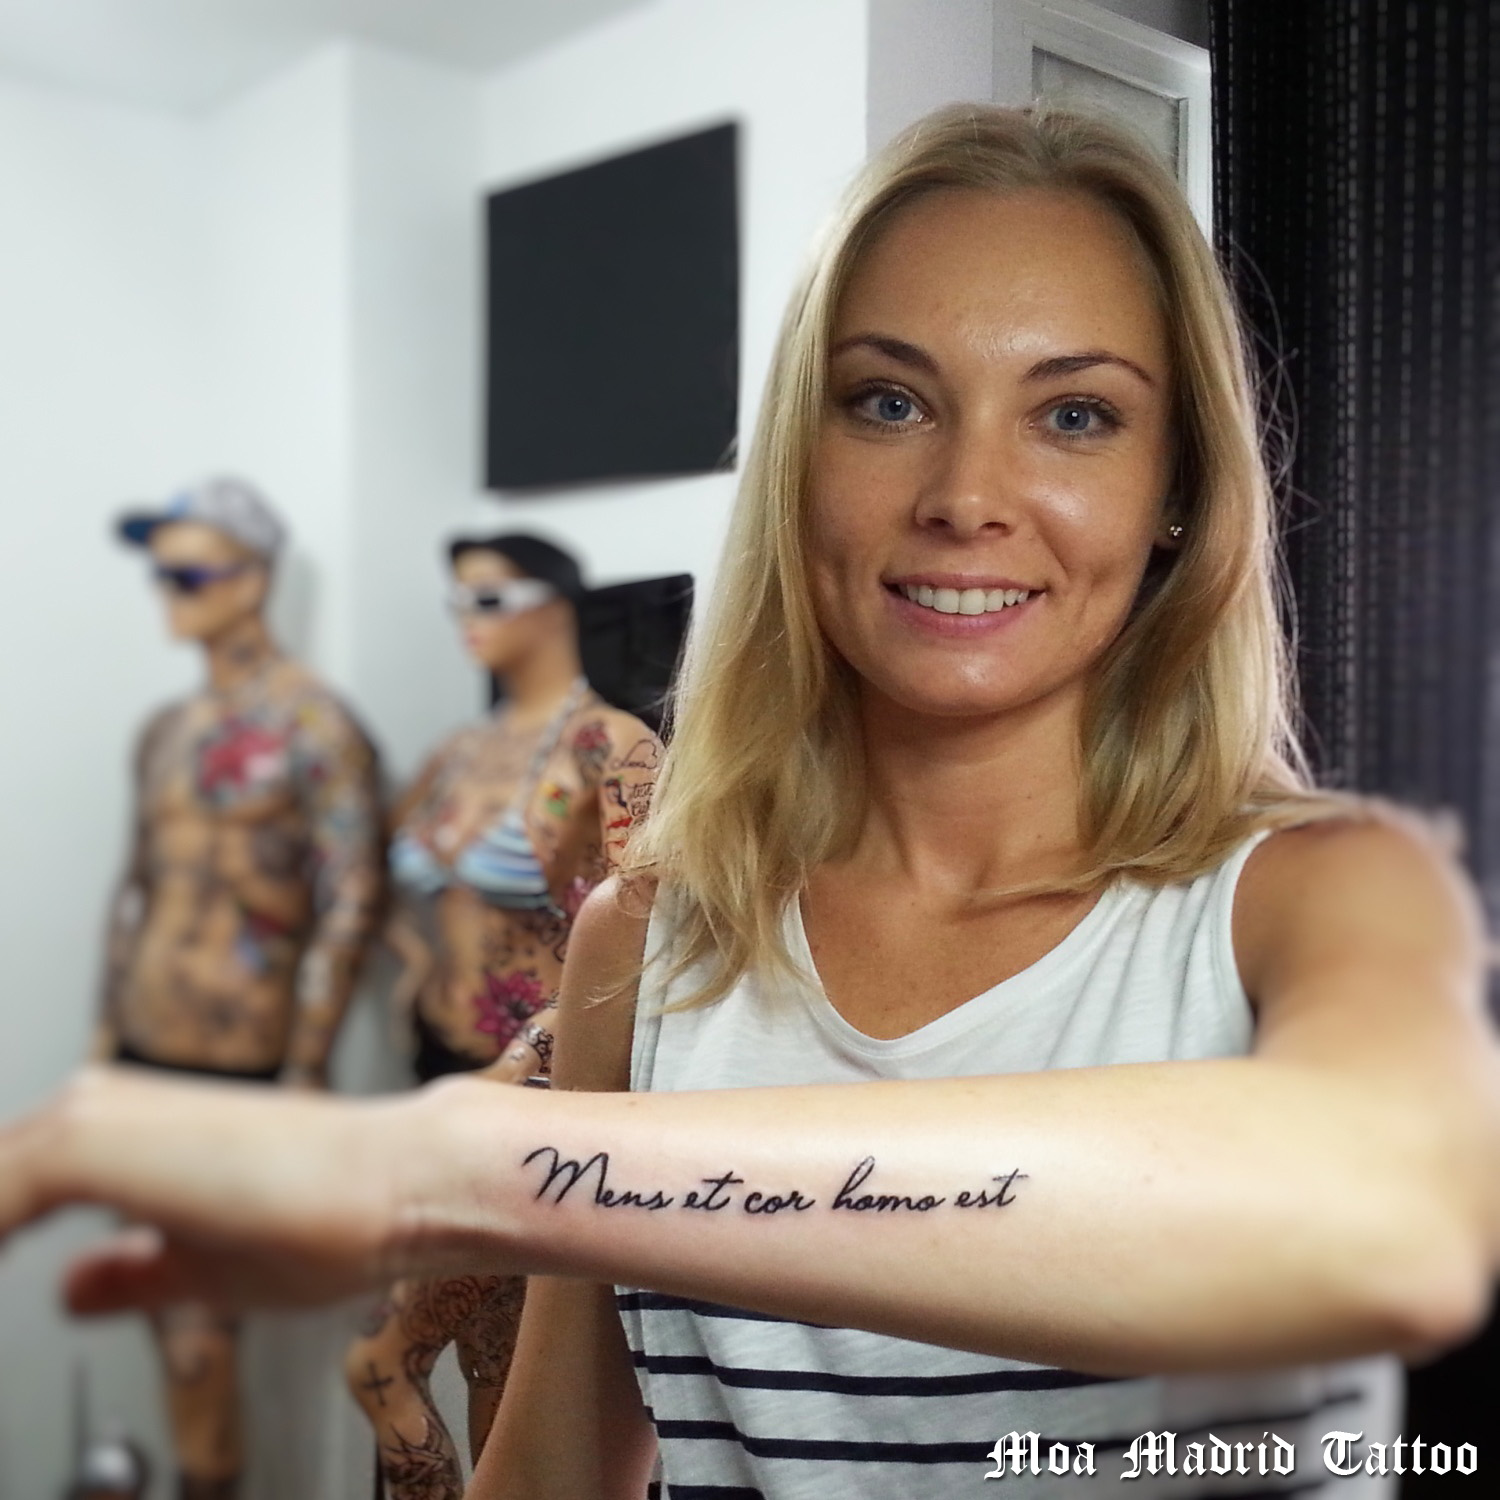 'Mens et cor homo est': Elegante tatuaje de frase en latín en antebrazo de mujer